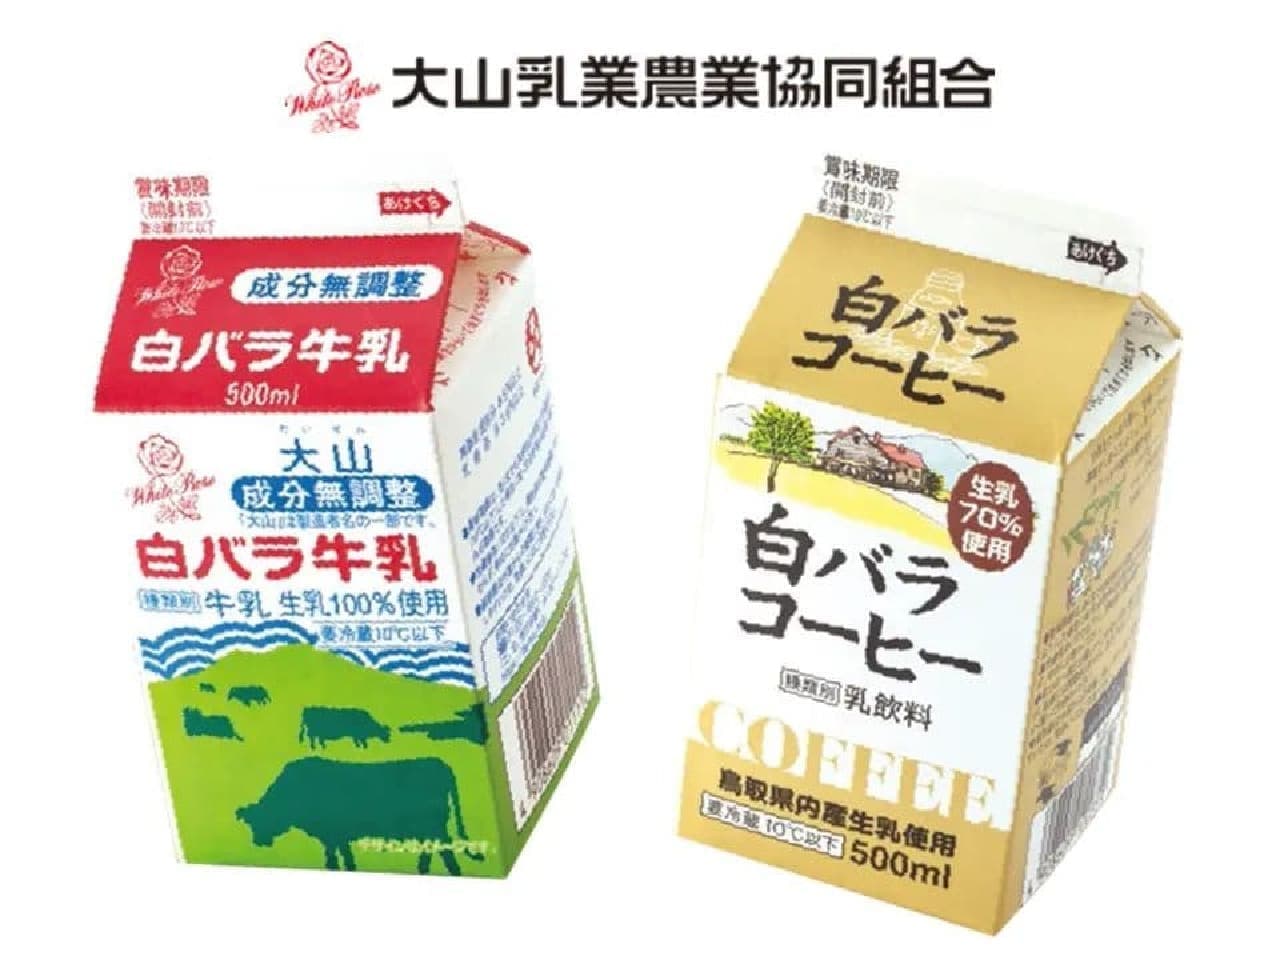 Shirobara Milk and Shirobara Coffee from Daisen Dairy Farmers Cooperative